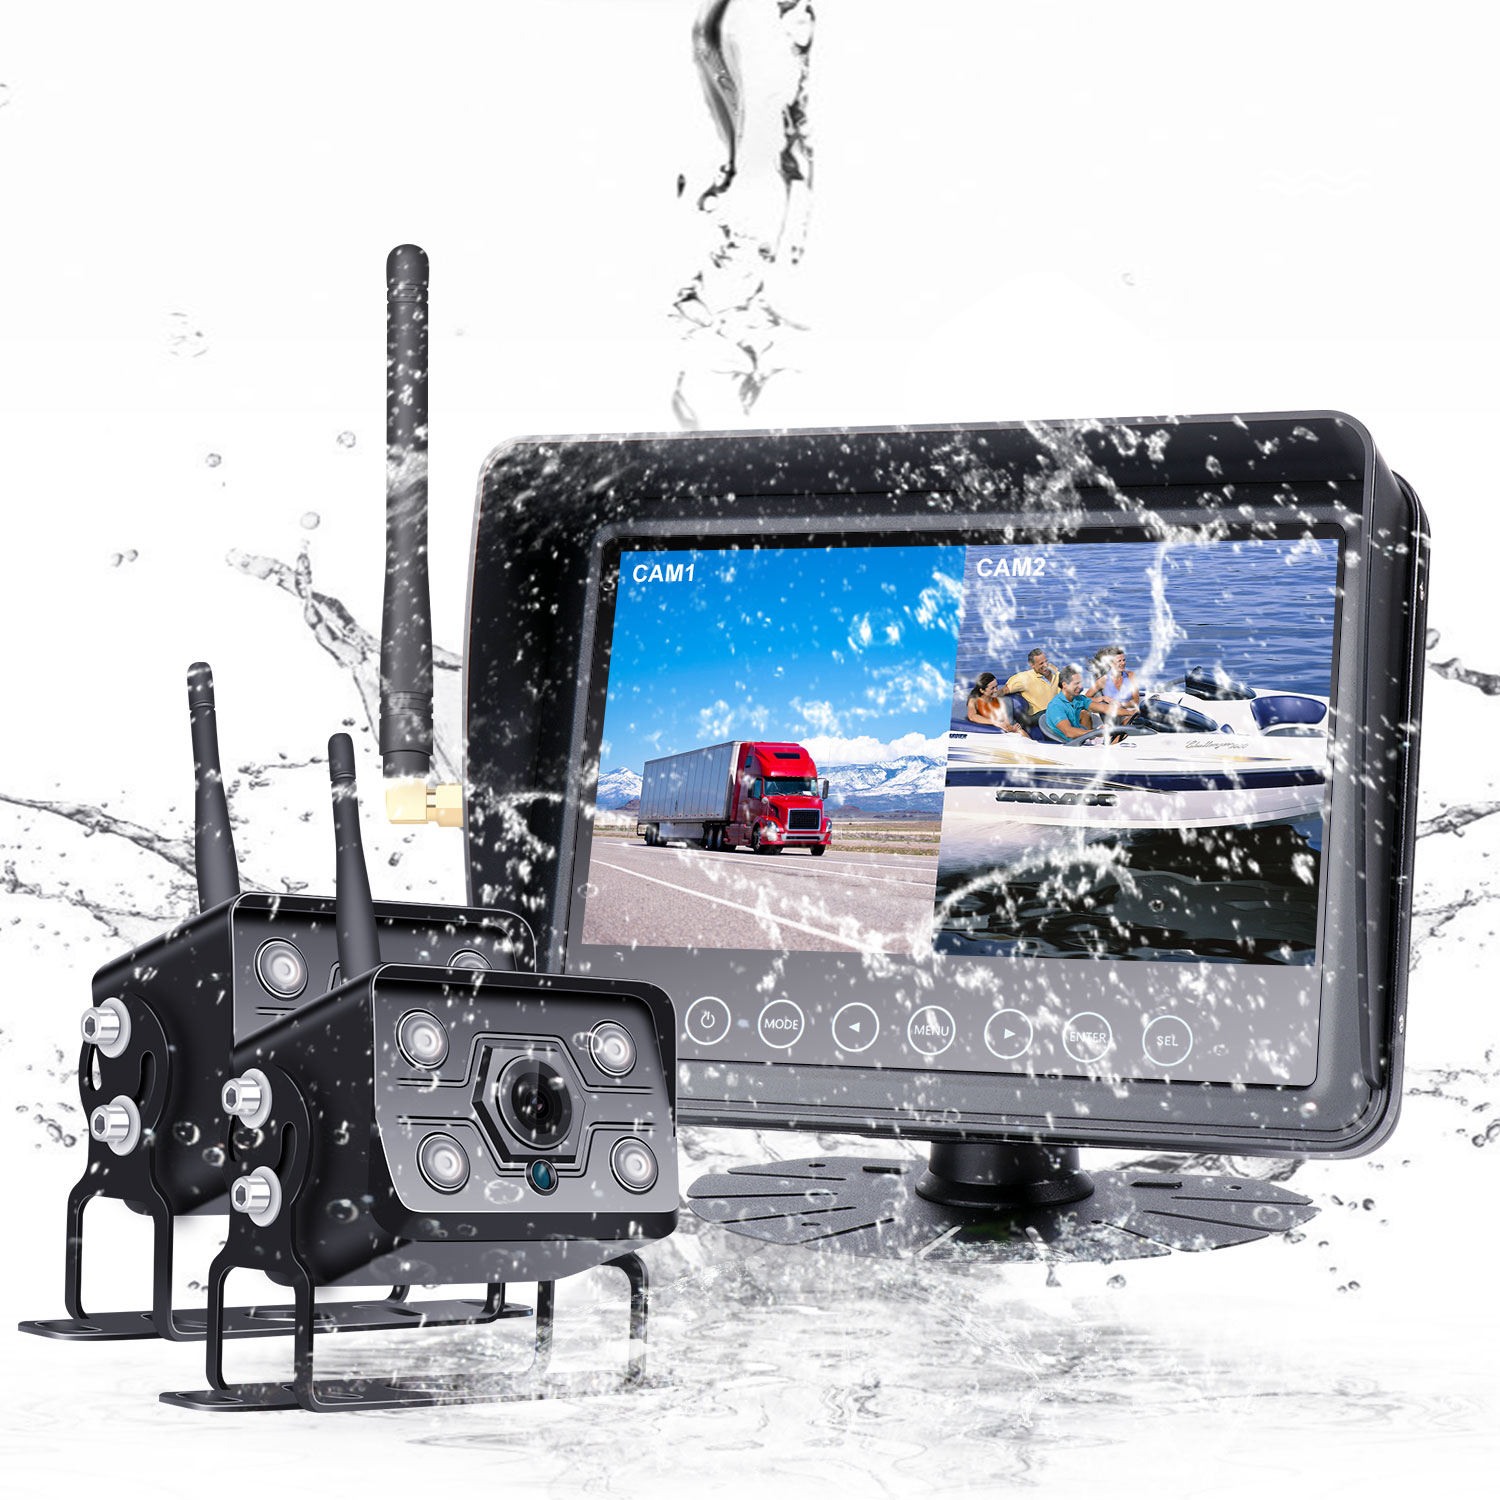 waterproof wireless backup car camera rearview monitor system reversing camera